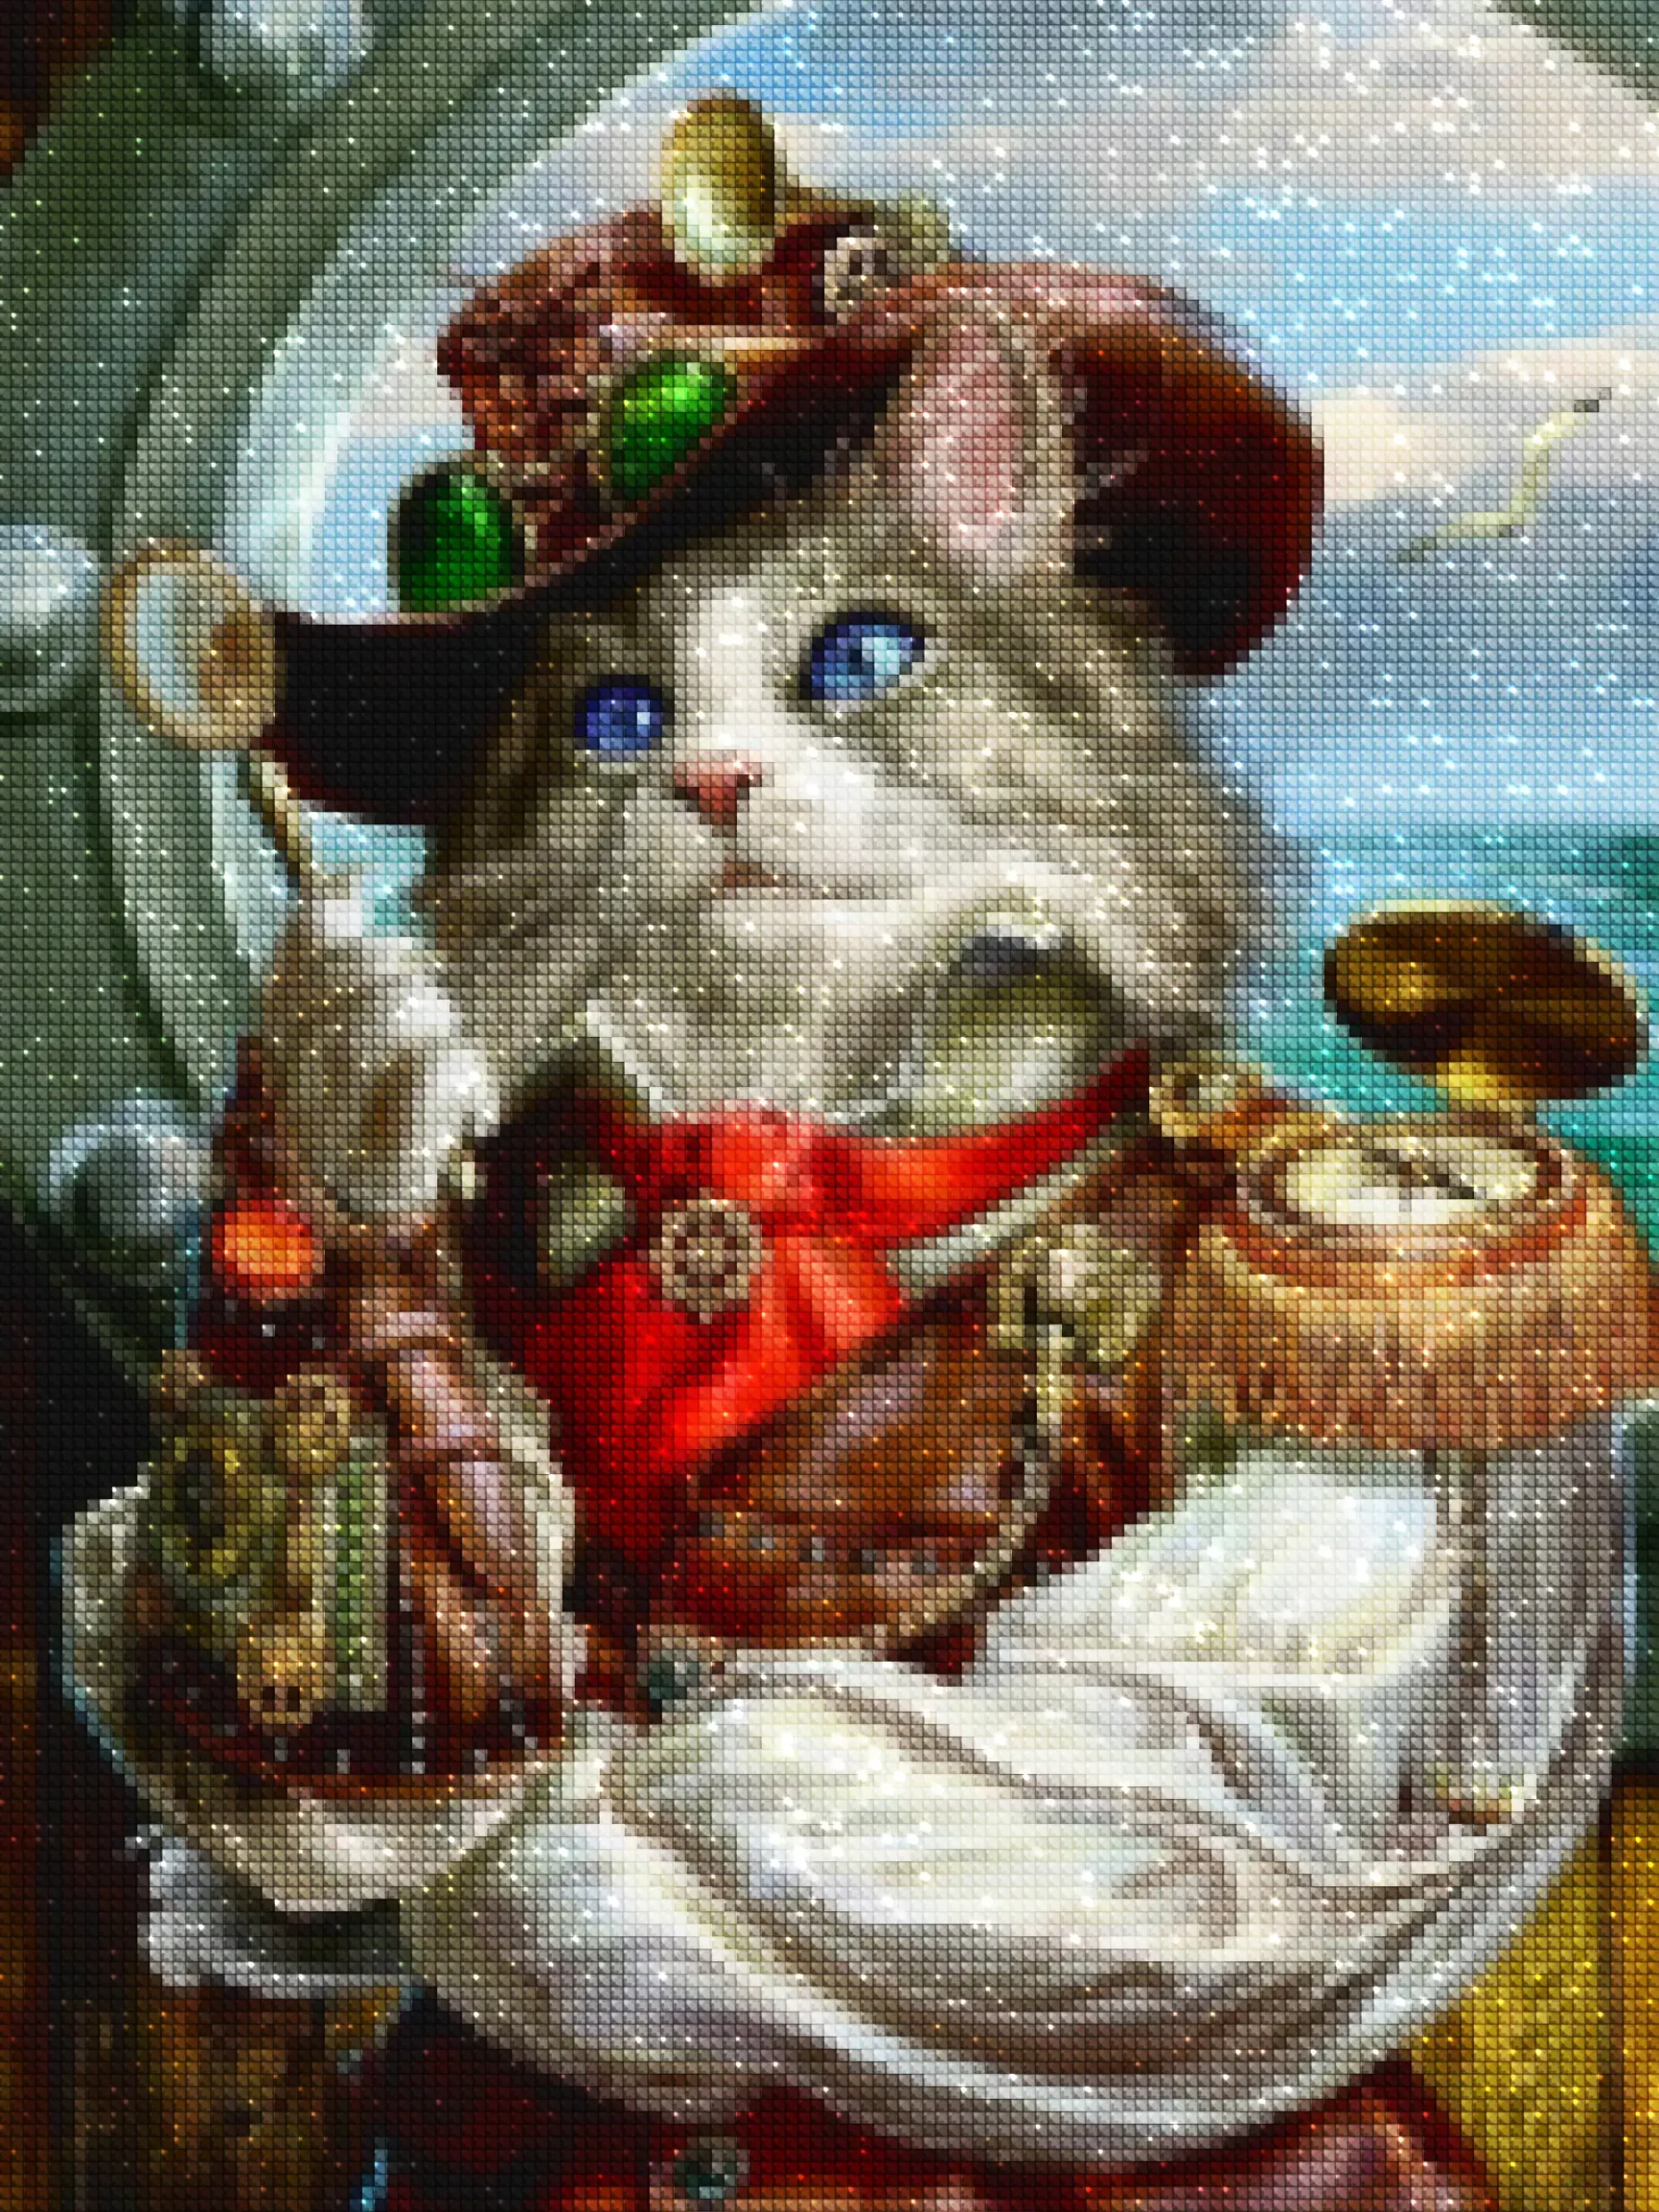 Diamond Painting Steampunk Cat – Diamonds Wizard